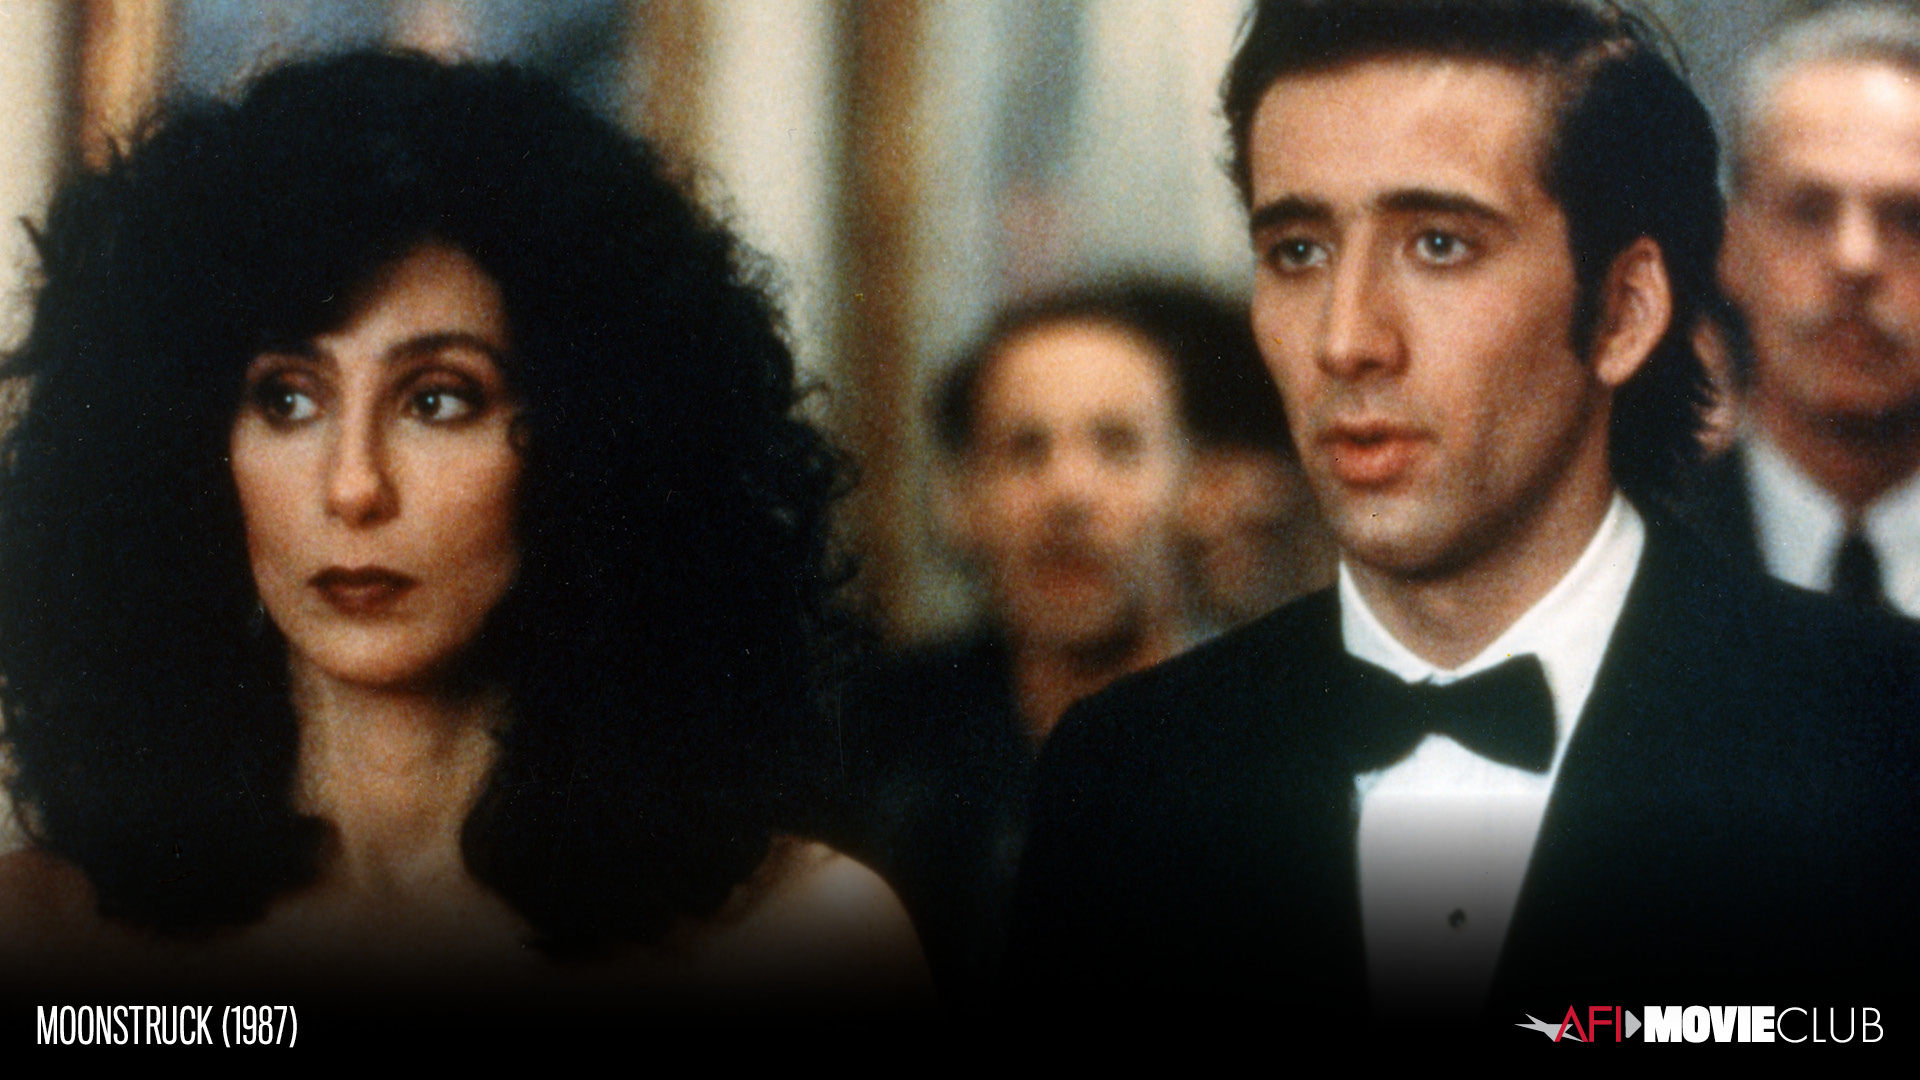 Moonstruck Film Still - Nicolas Cage and Cher